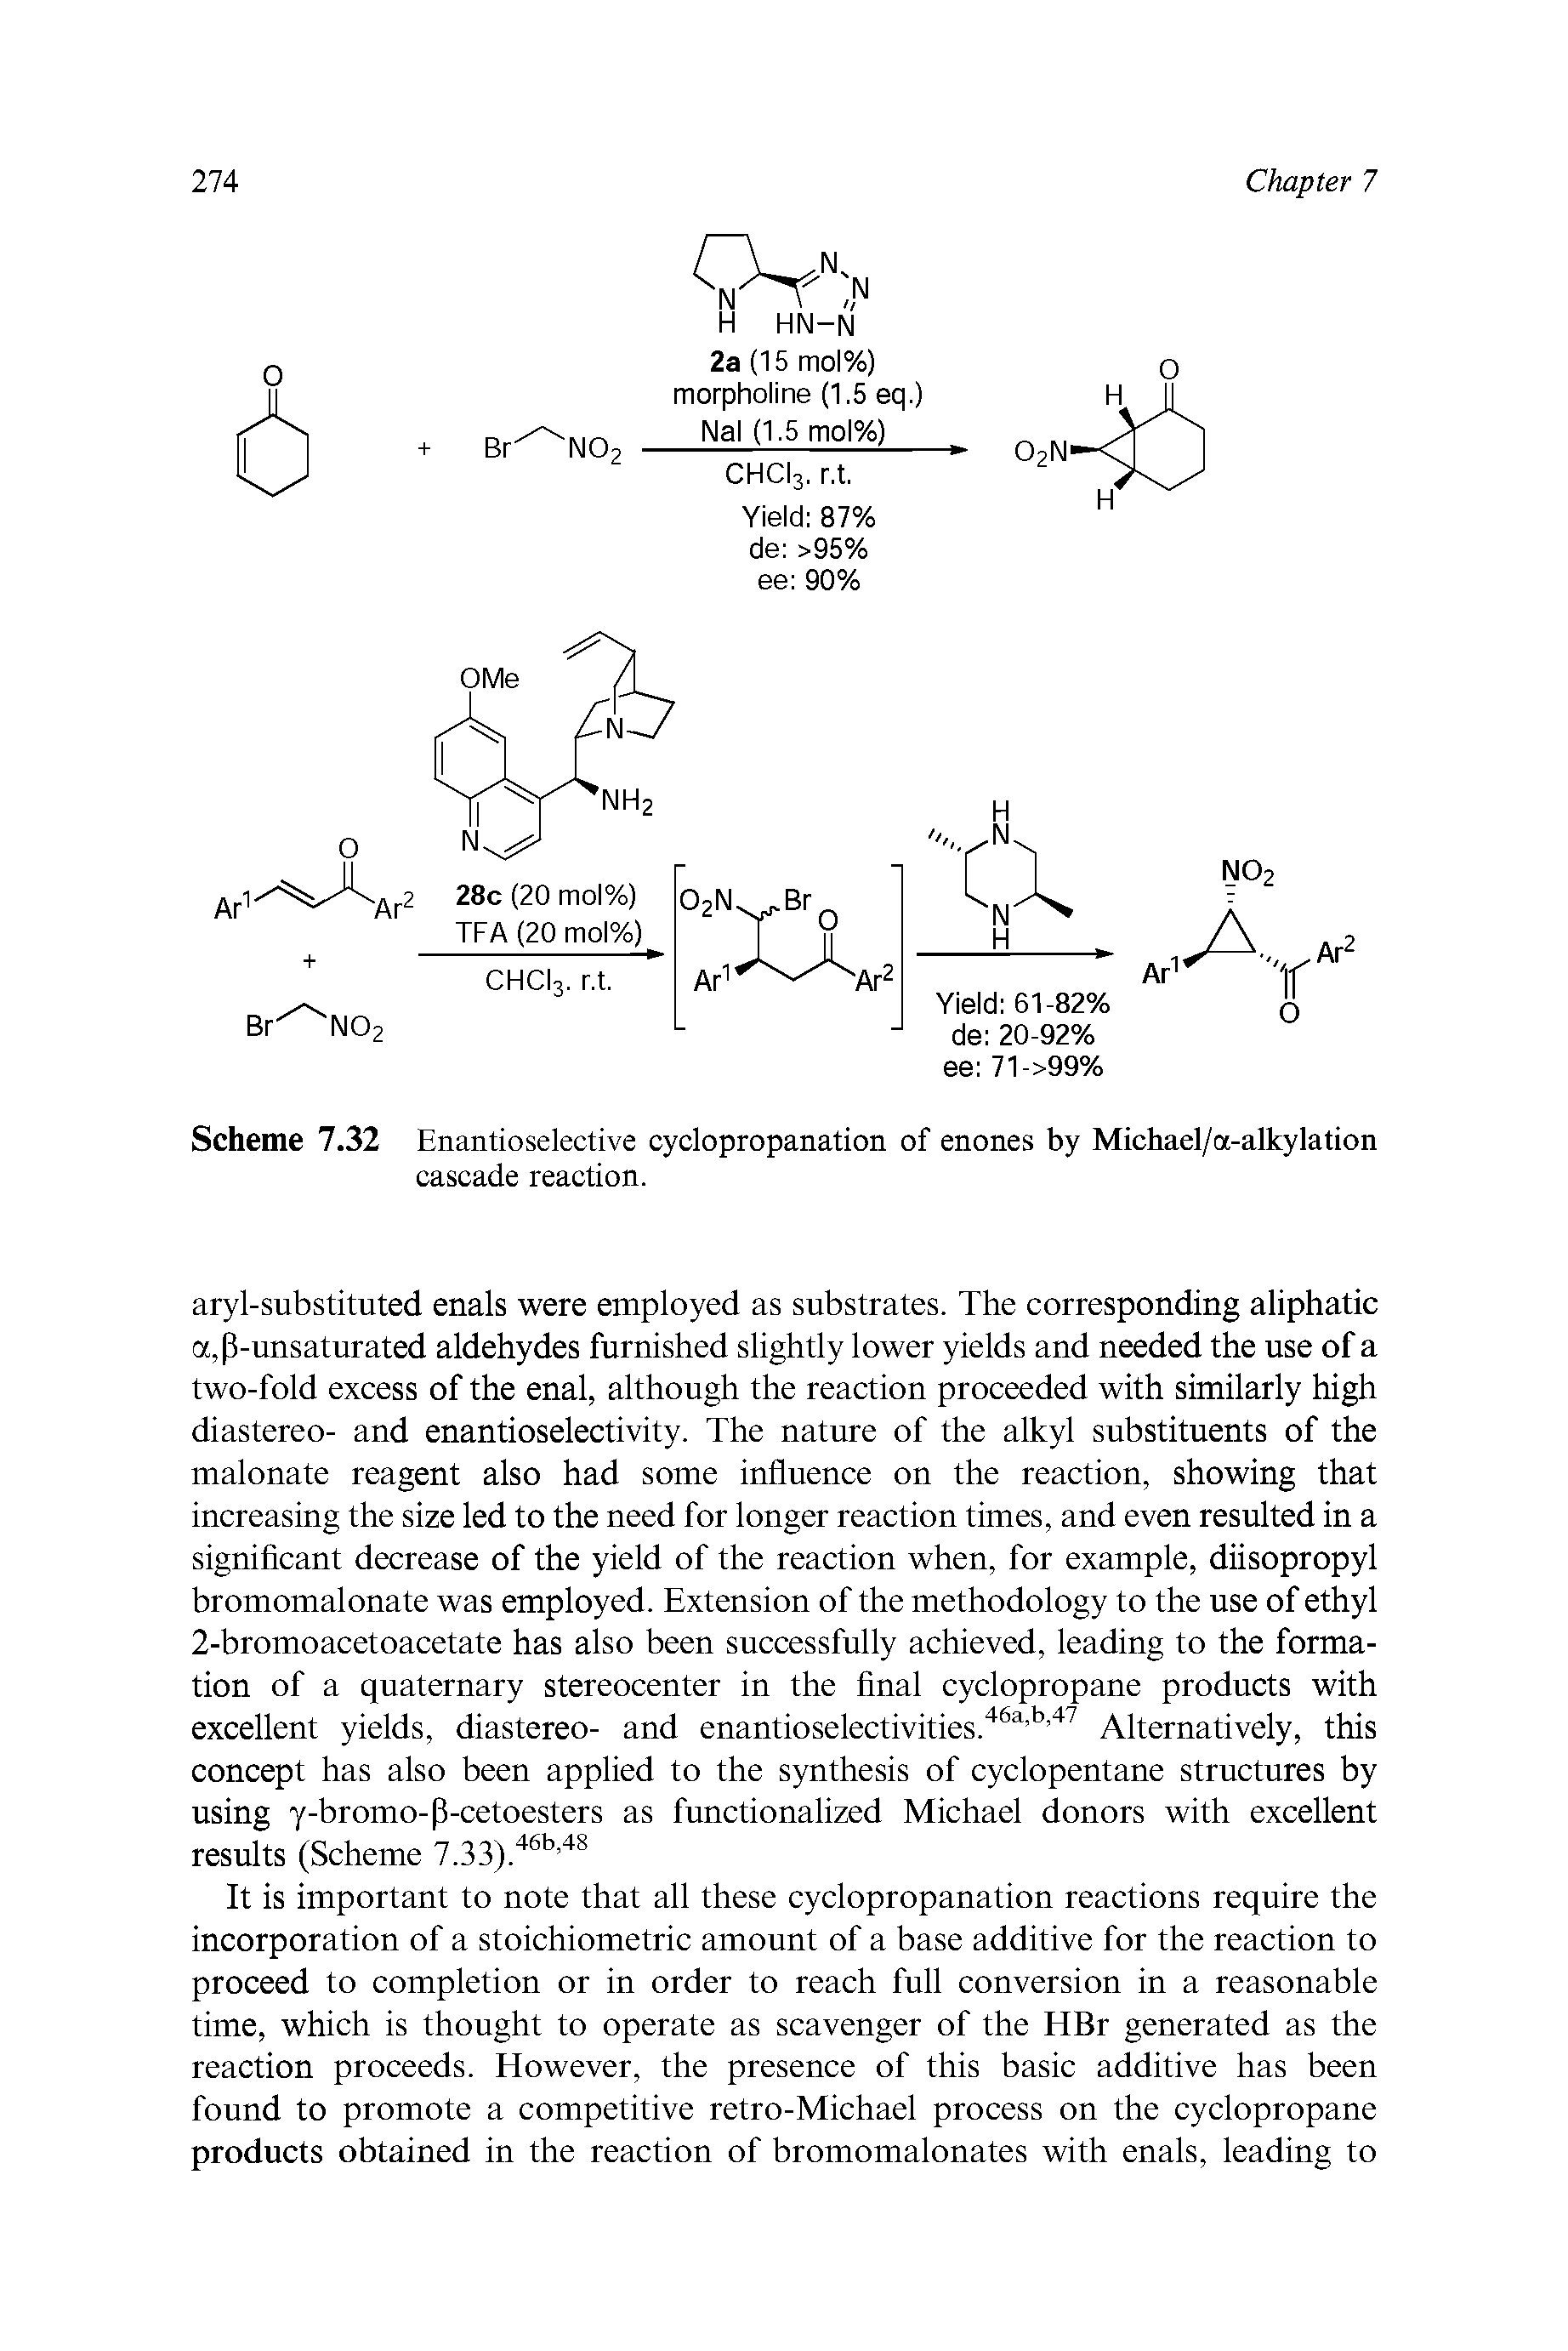 Scheme 7.32 Enantioselective cyclopropanation of enones by Michael/a-alkylation cascade reaction.